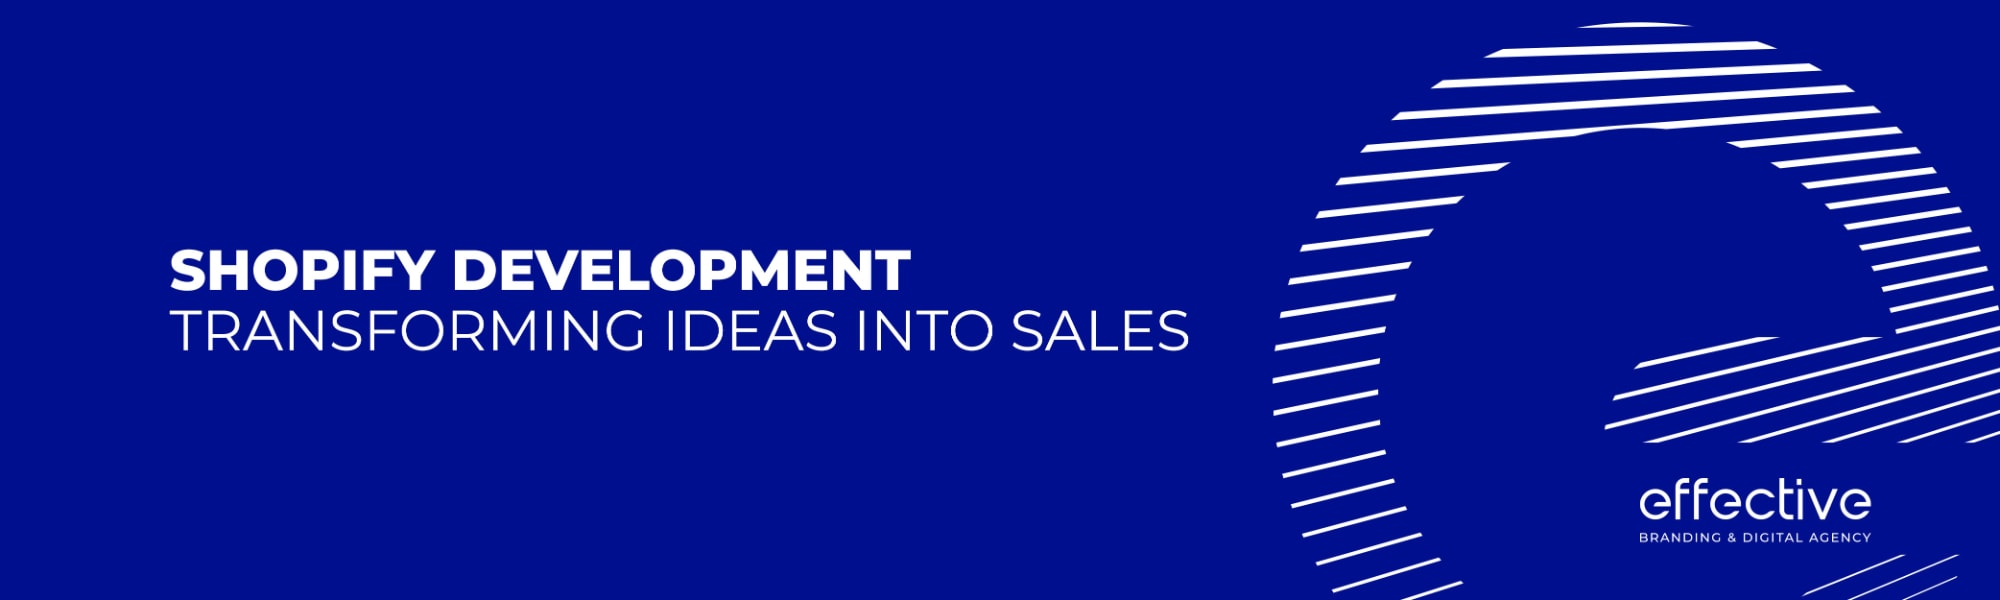 Shopify Development Transforming Ideas into Sales